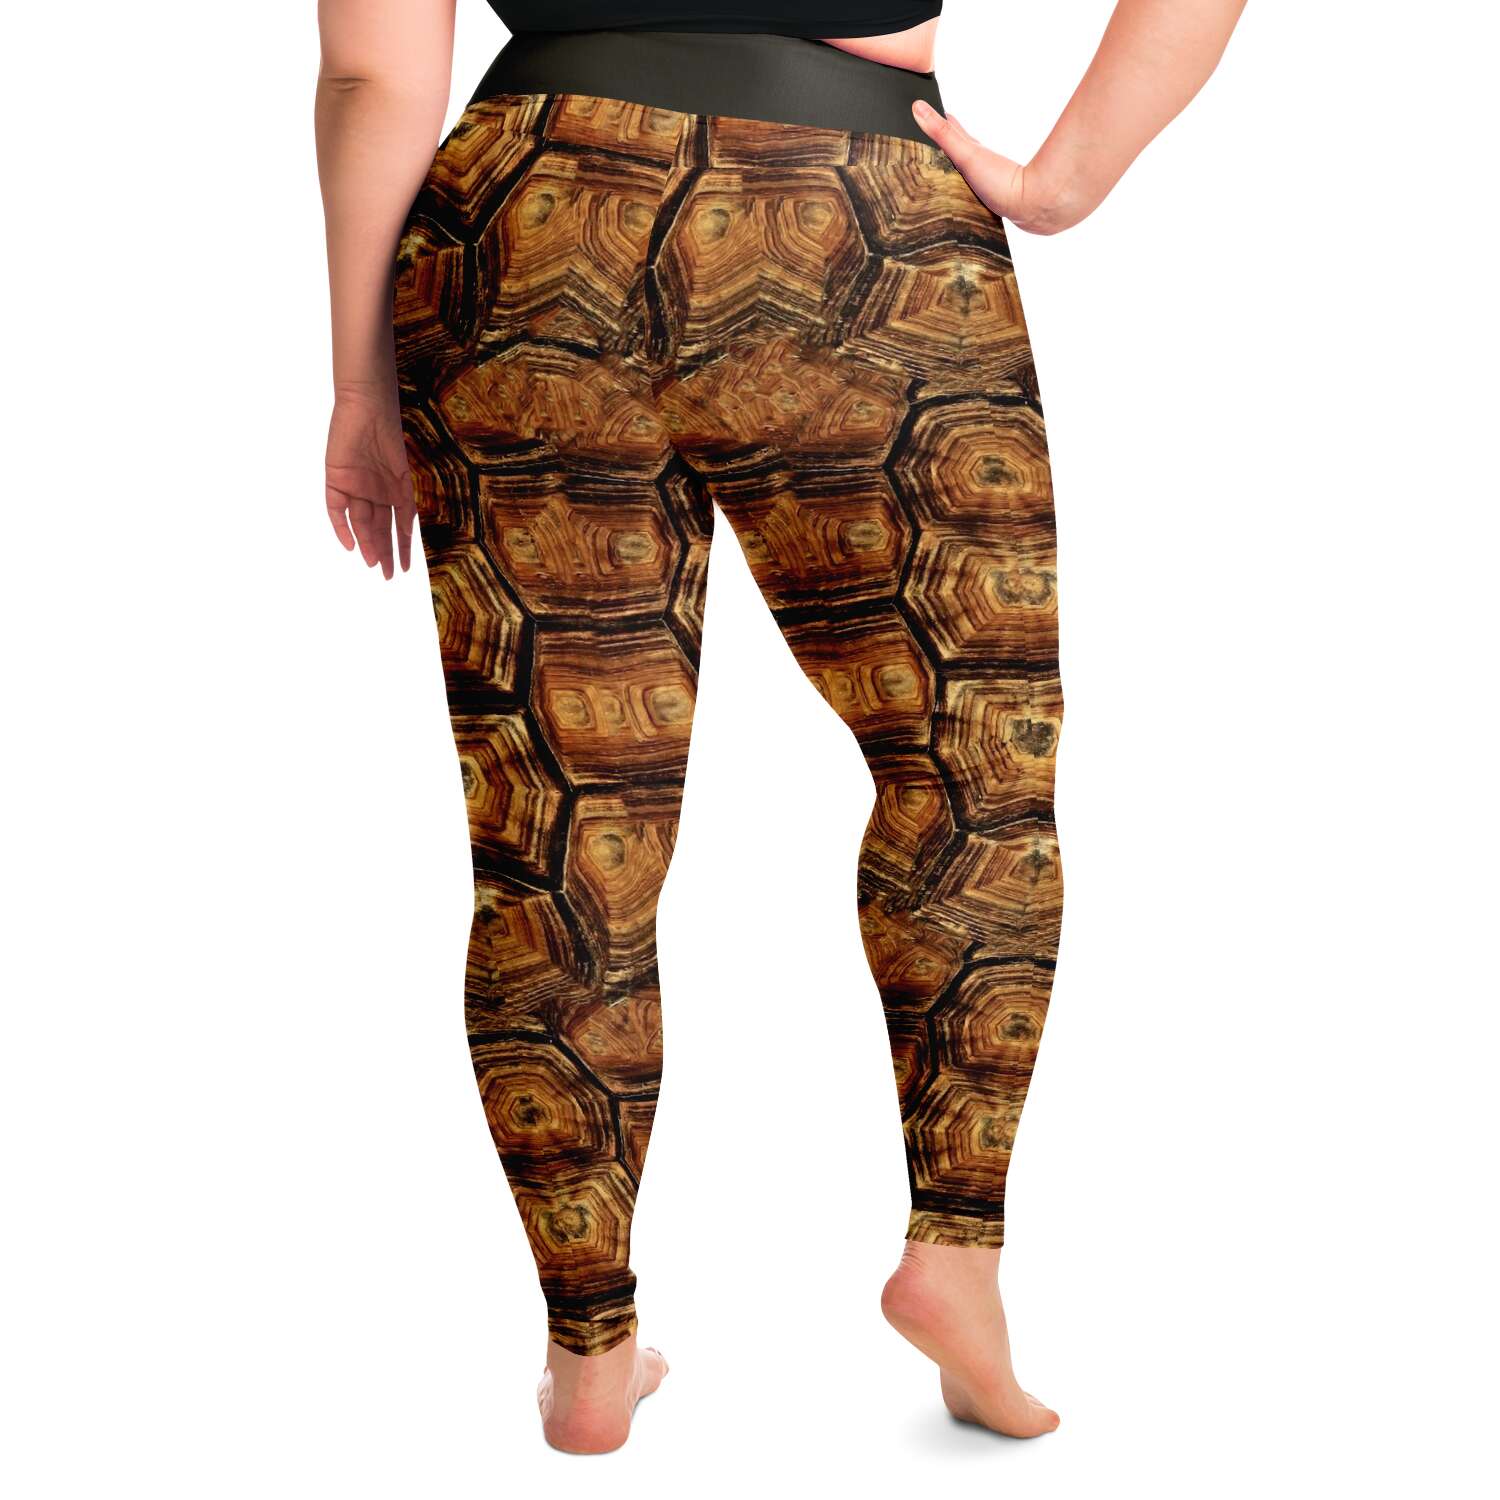 Side to back view of model wearing turtle leggings / skins